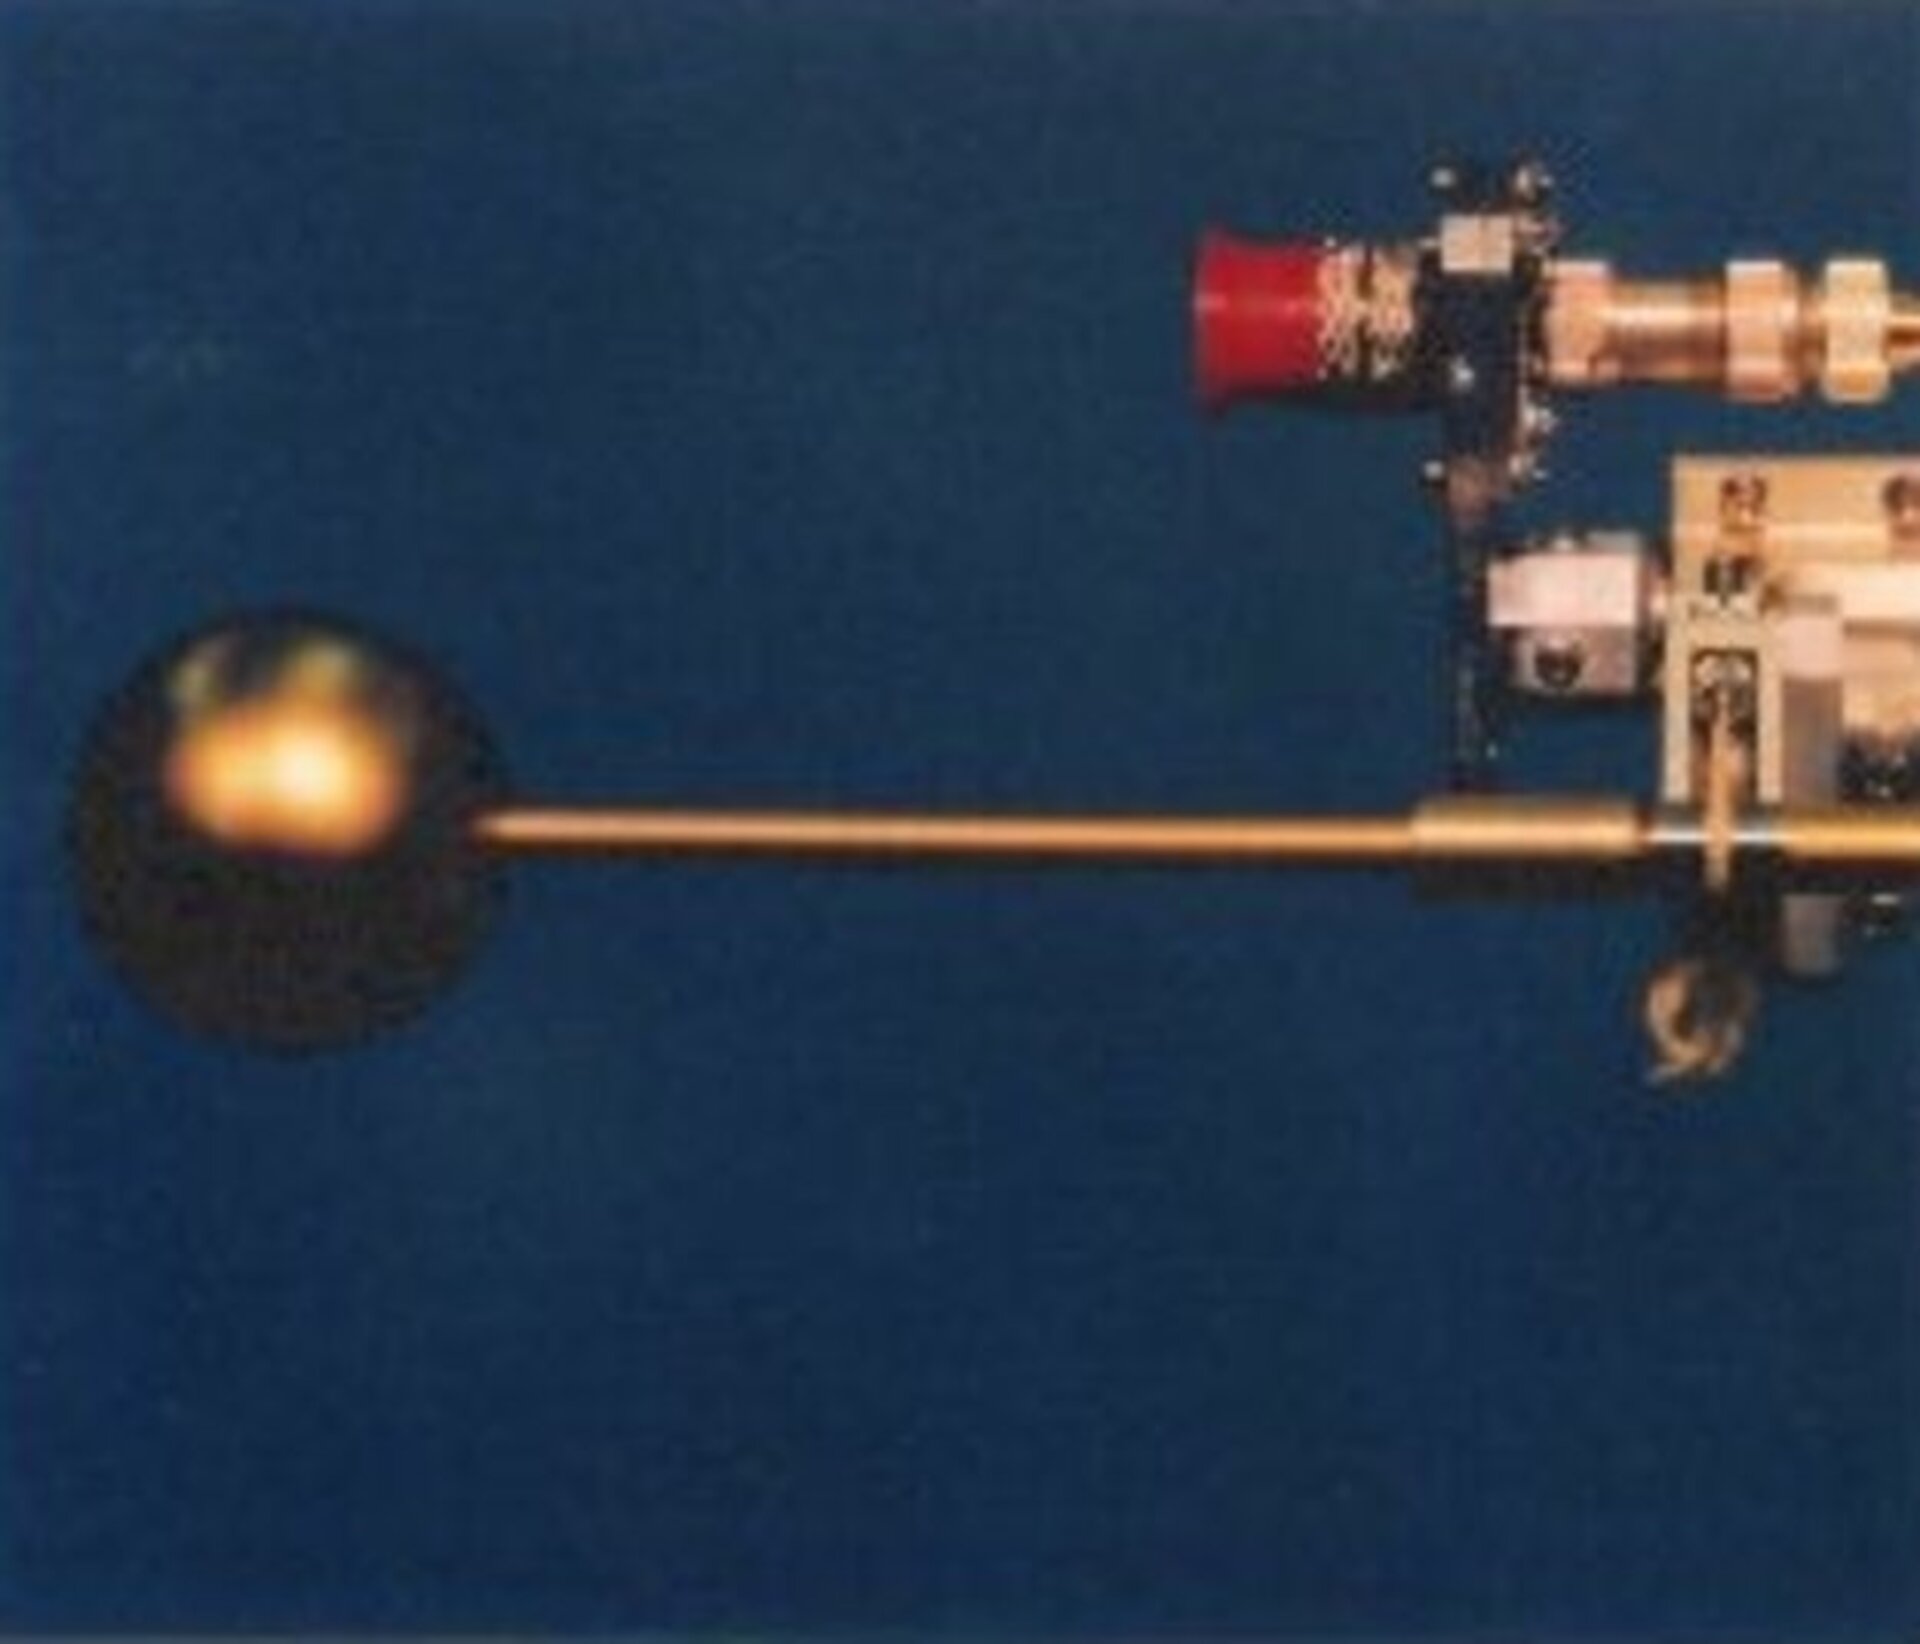 Cassini's Langmuir probe